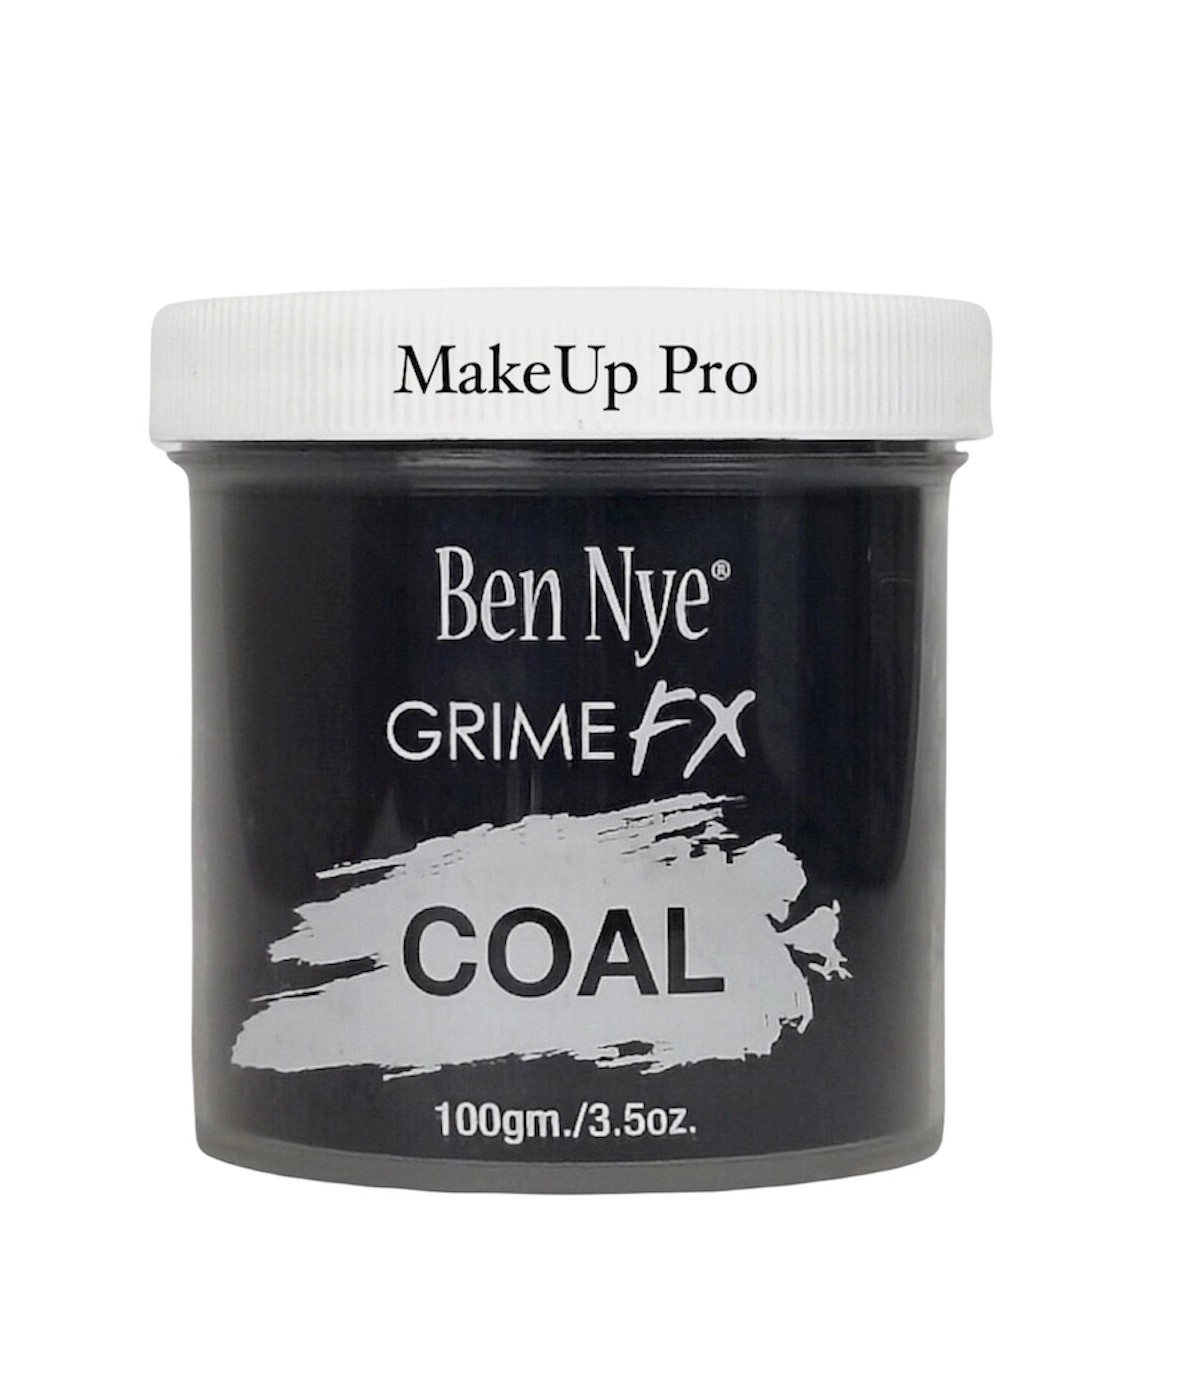 Ben Nye Grime FX Powder COAL